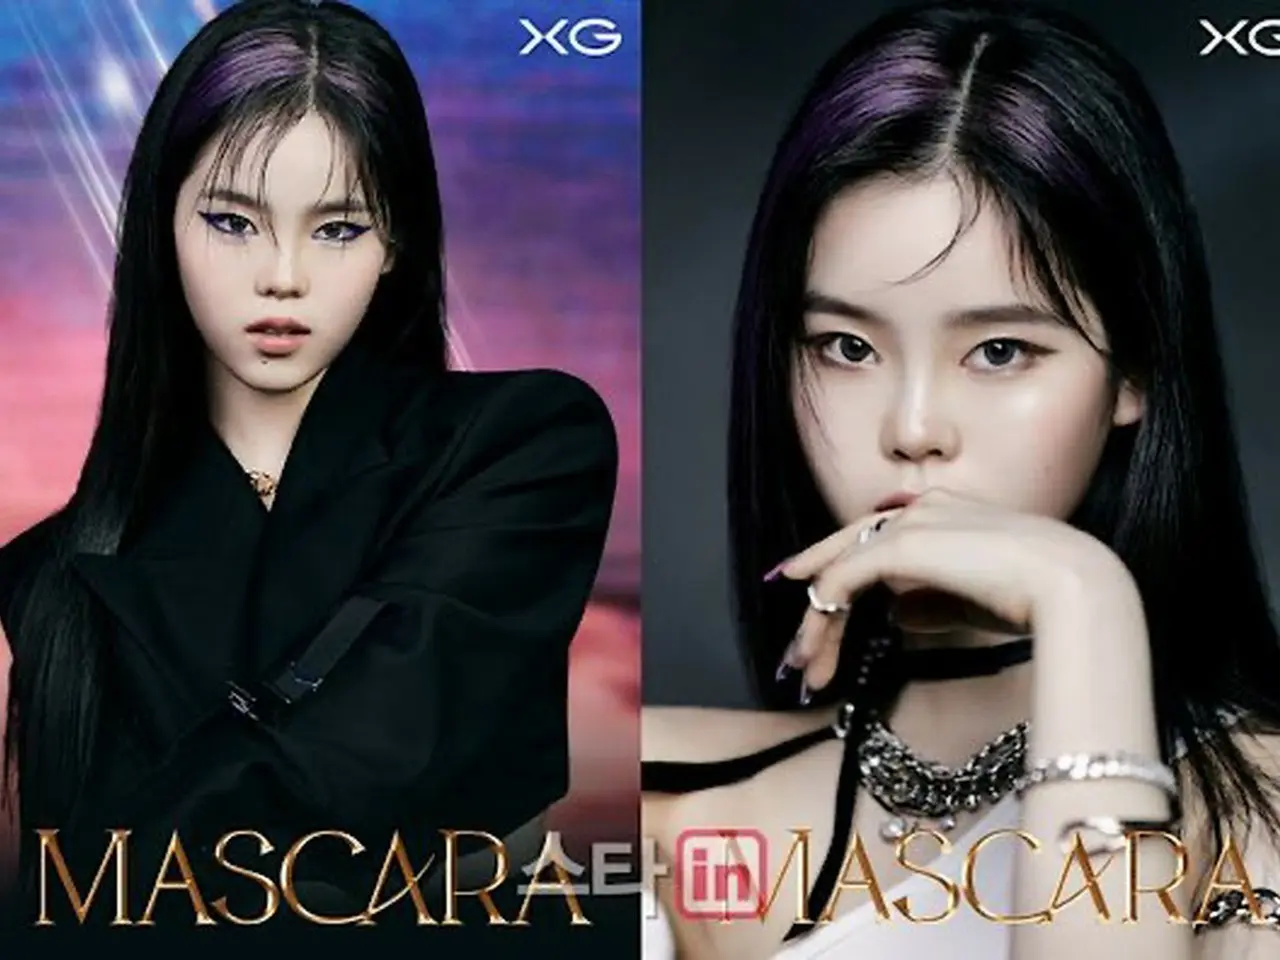 XG ココナ mascara サノク トレカ - K-POP/アジア